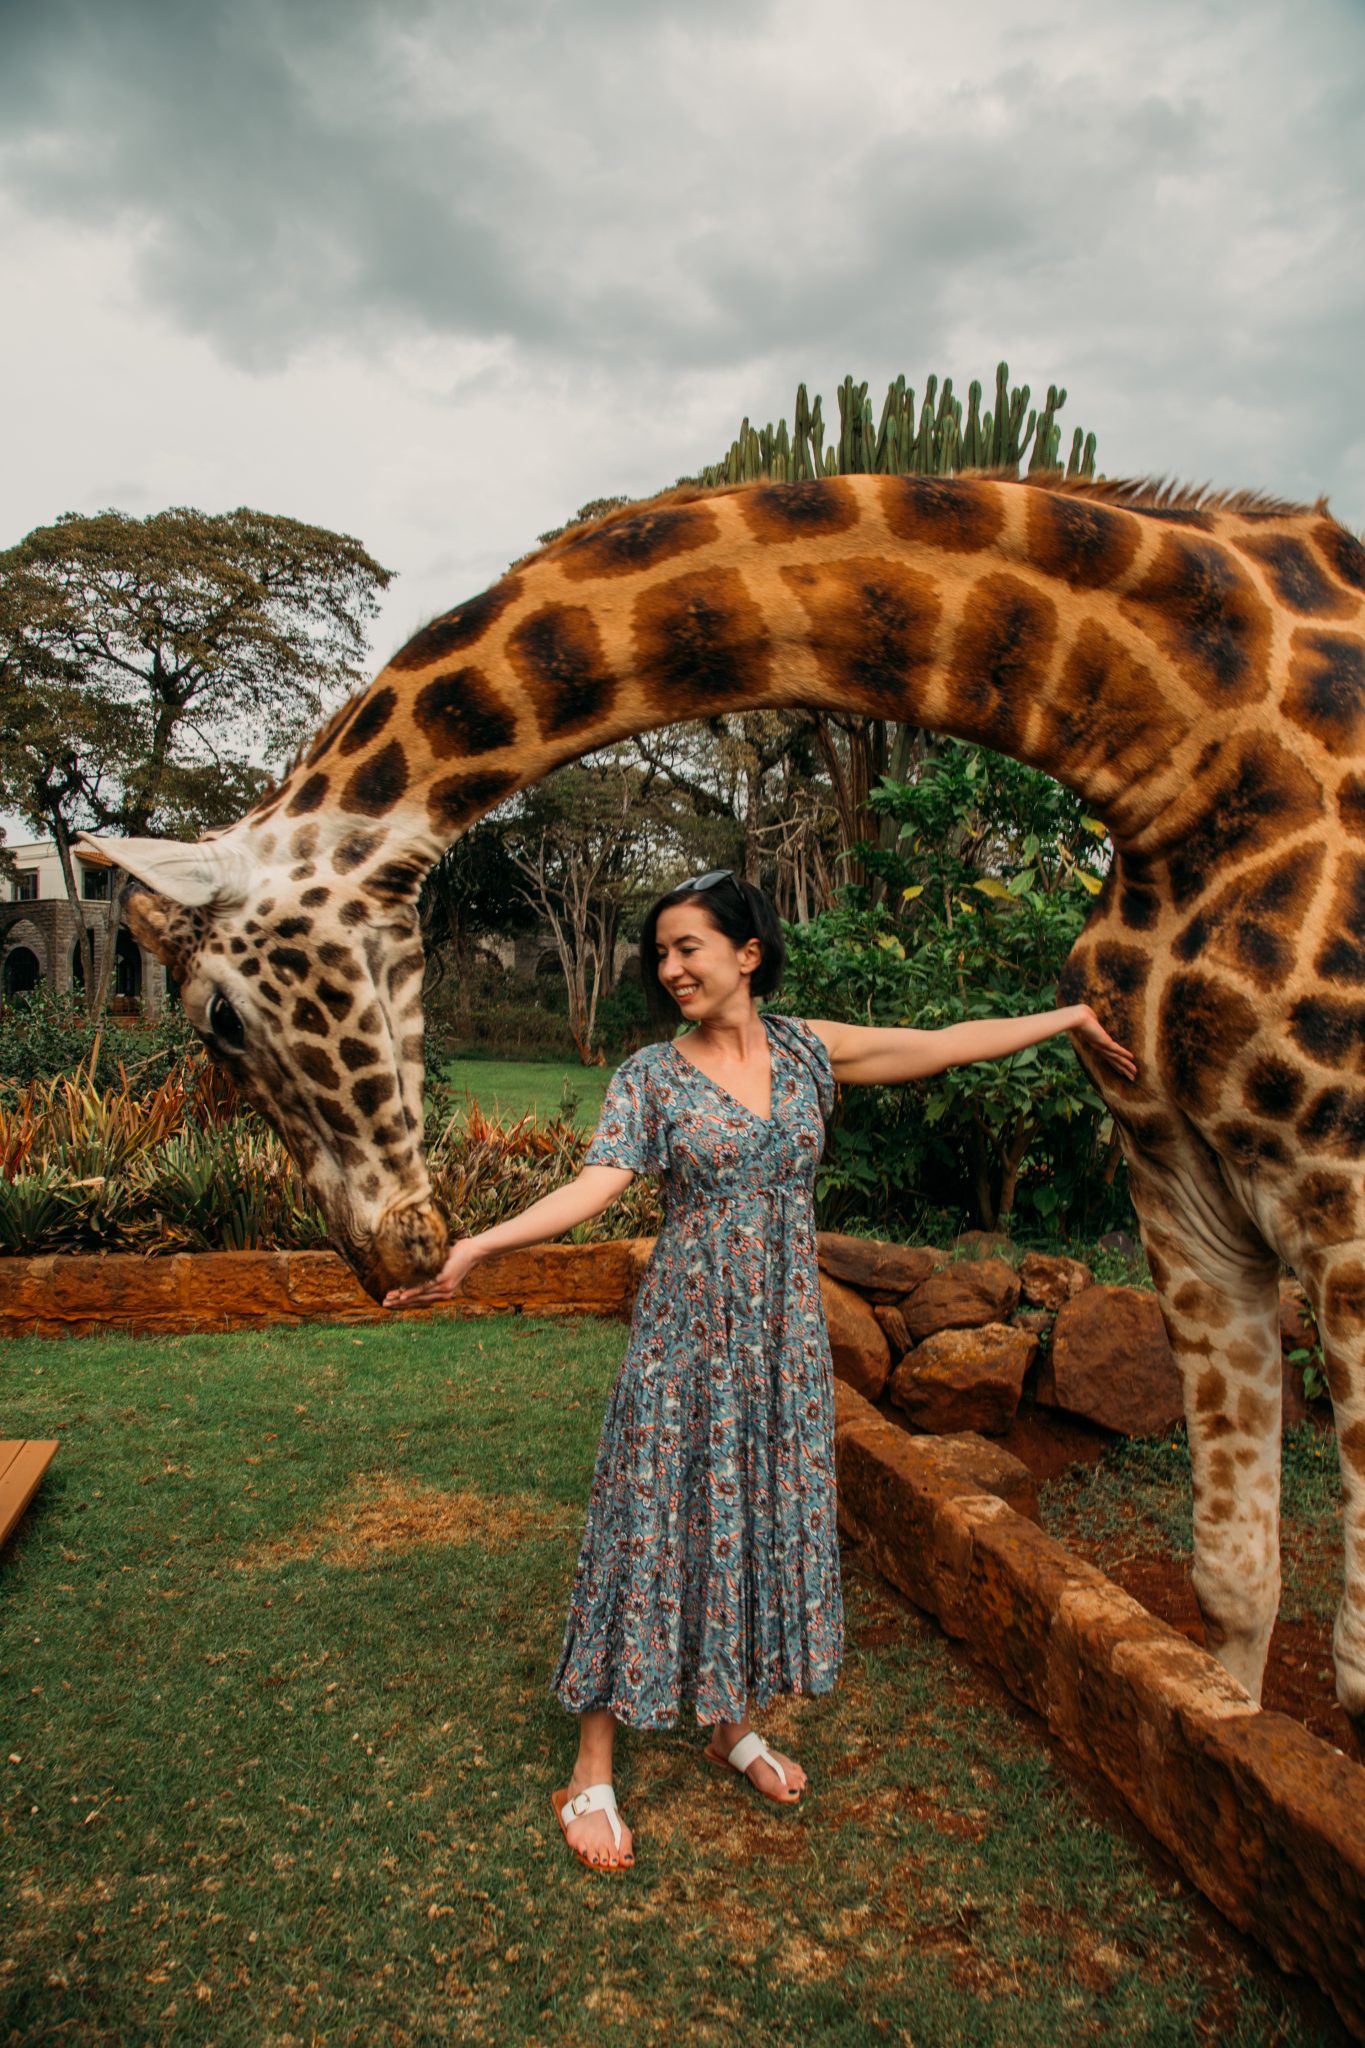 A woman petting and feeding a giraffe at Giraffe Manor